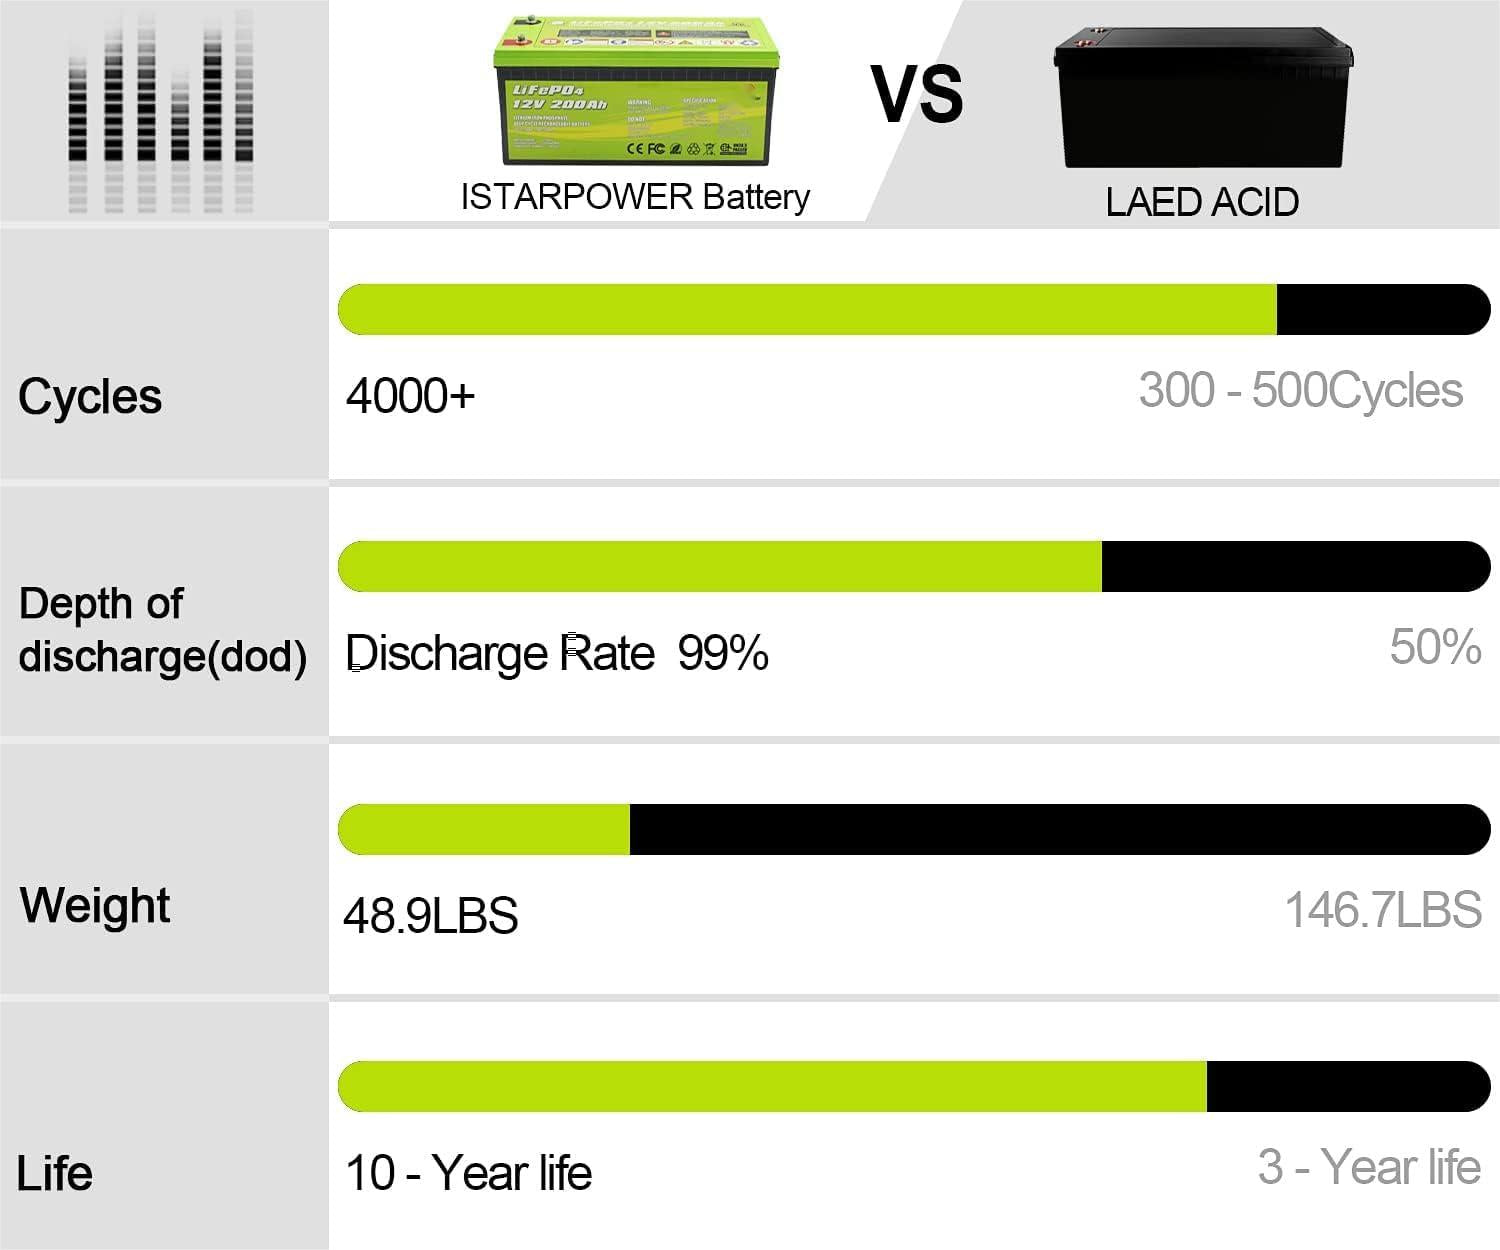 Acopower 12V/200Ah LiFePO4 Deep Cycle Battery – Solar Paradise